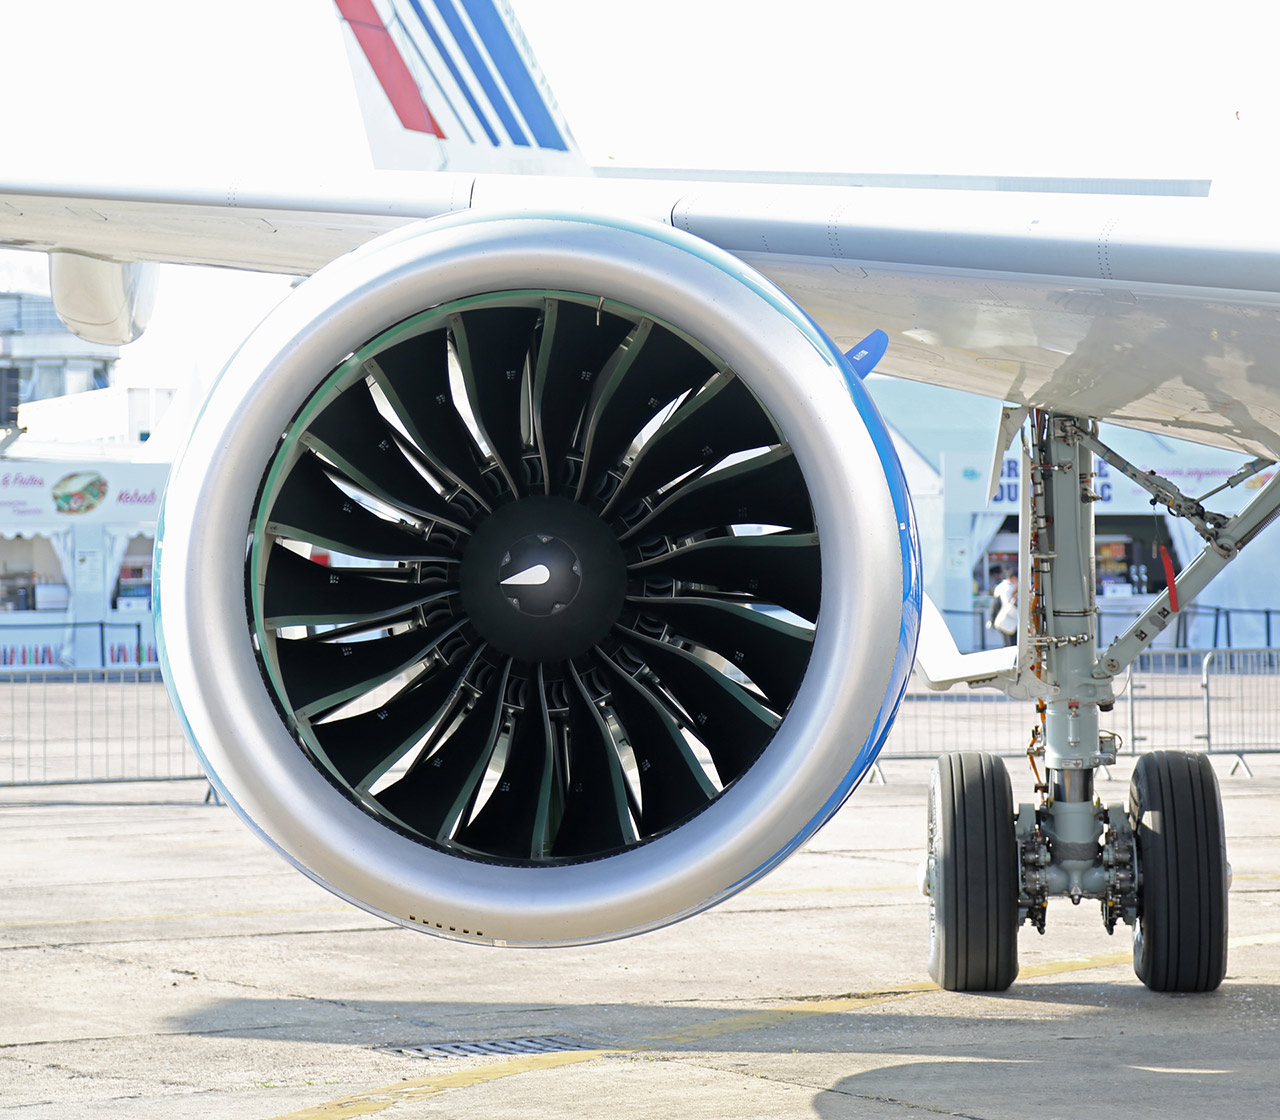 Turbine engine of an aircraft.